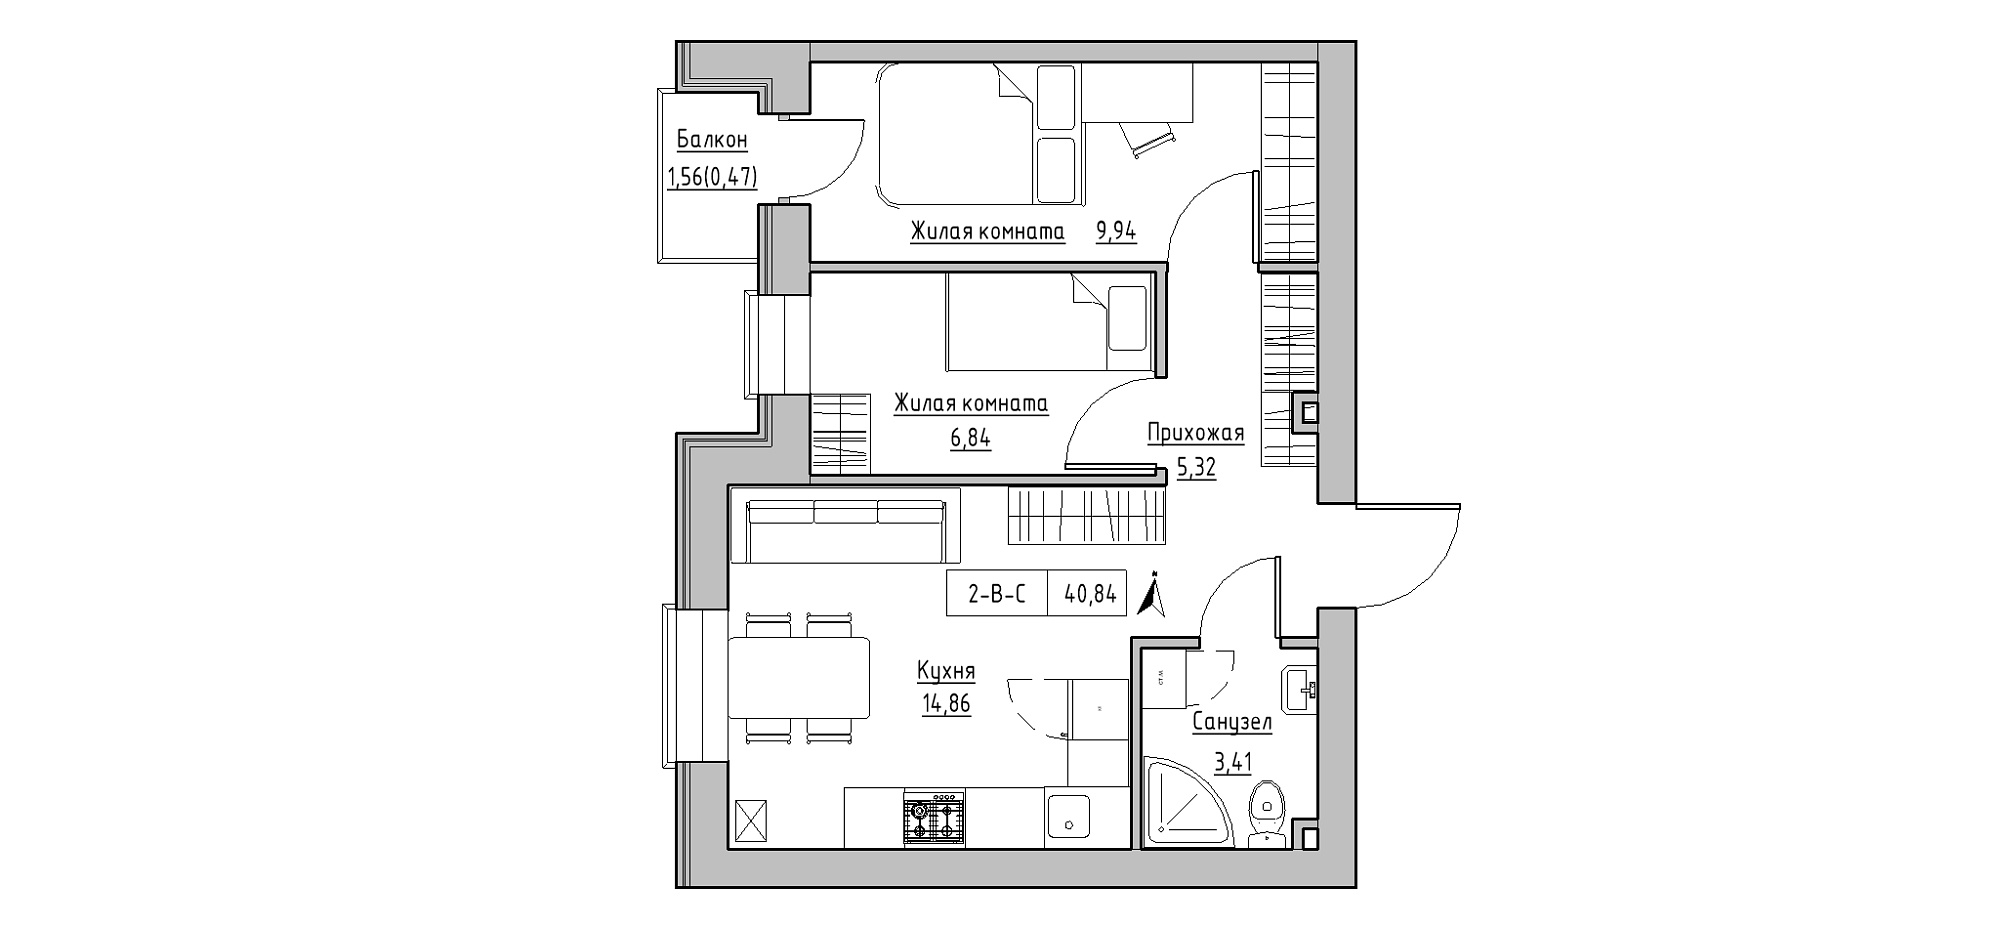 Planning 2-rm flats area 40.84m2, KS-020-04/0010.